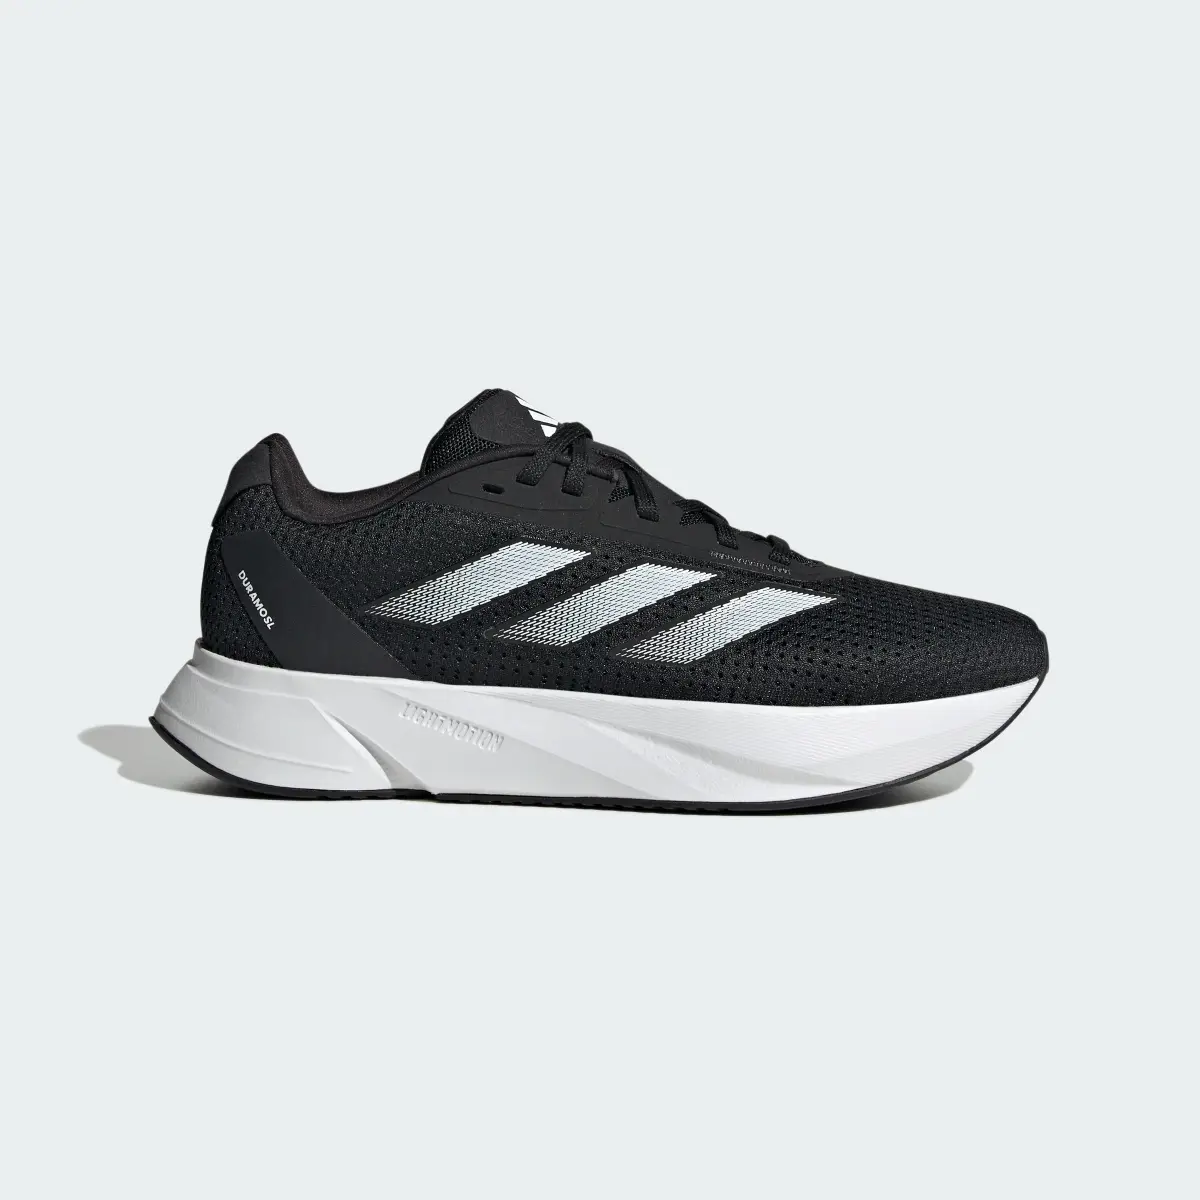 Adidas Duramo SL Wide Running Shoes. 2